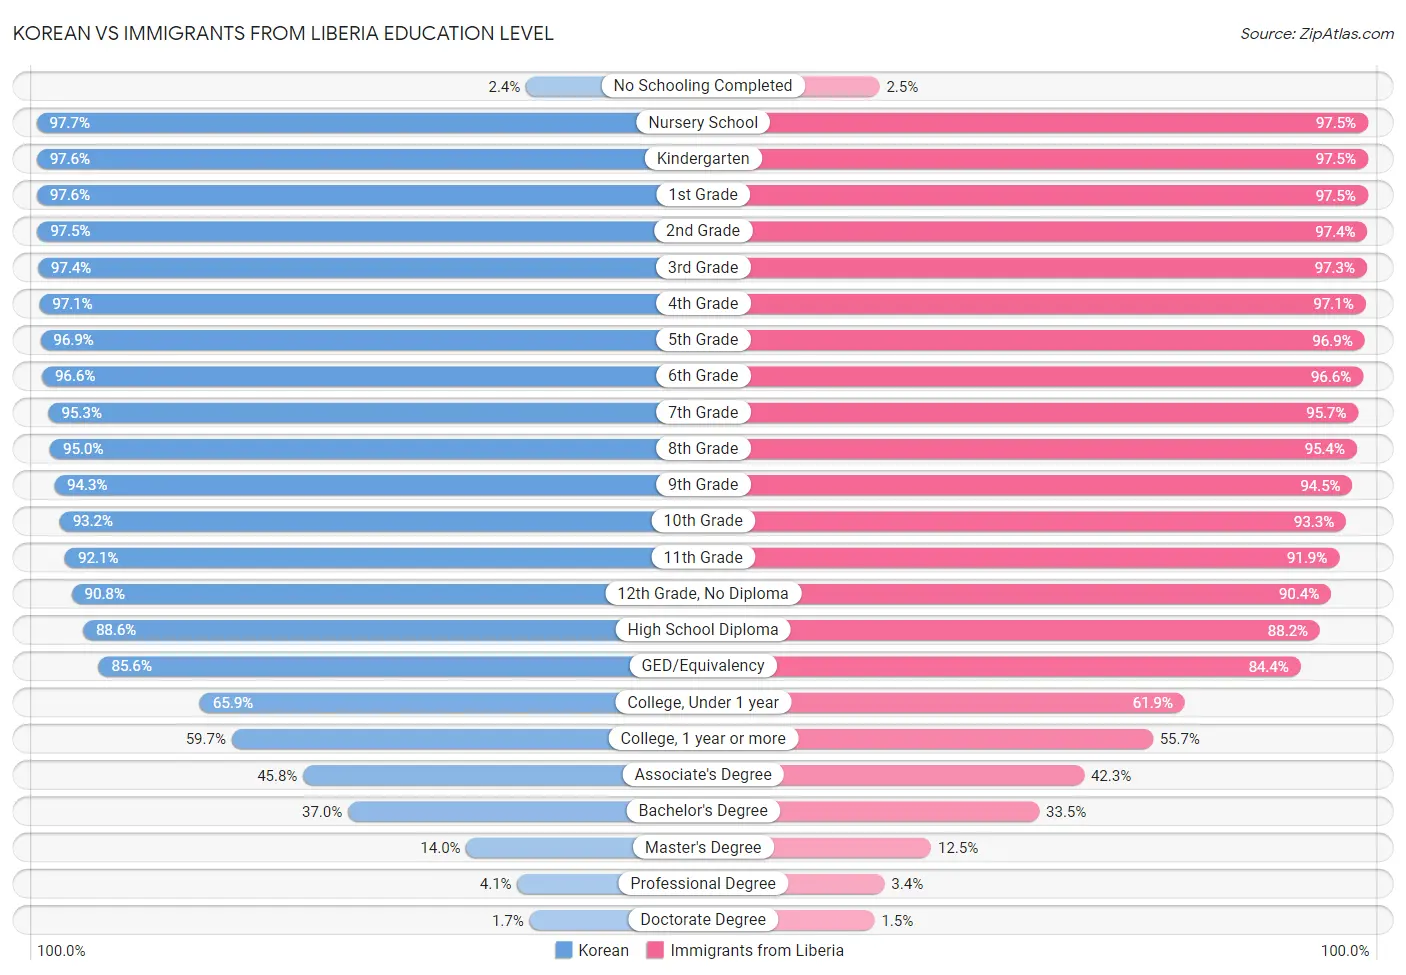 Korean vs Immigrants from Liberia Education Level